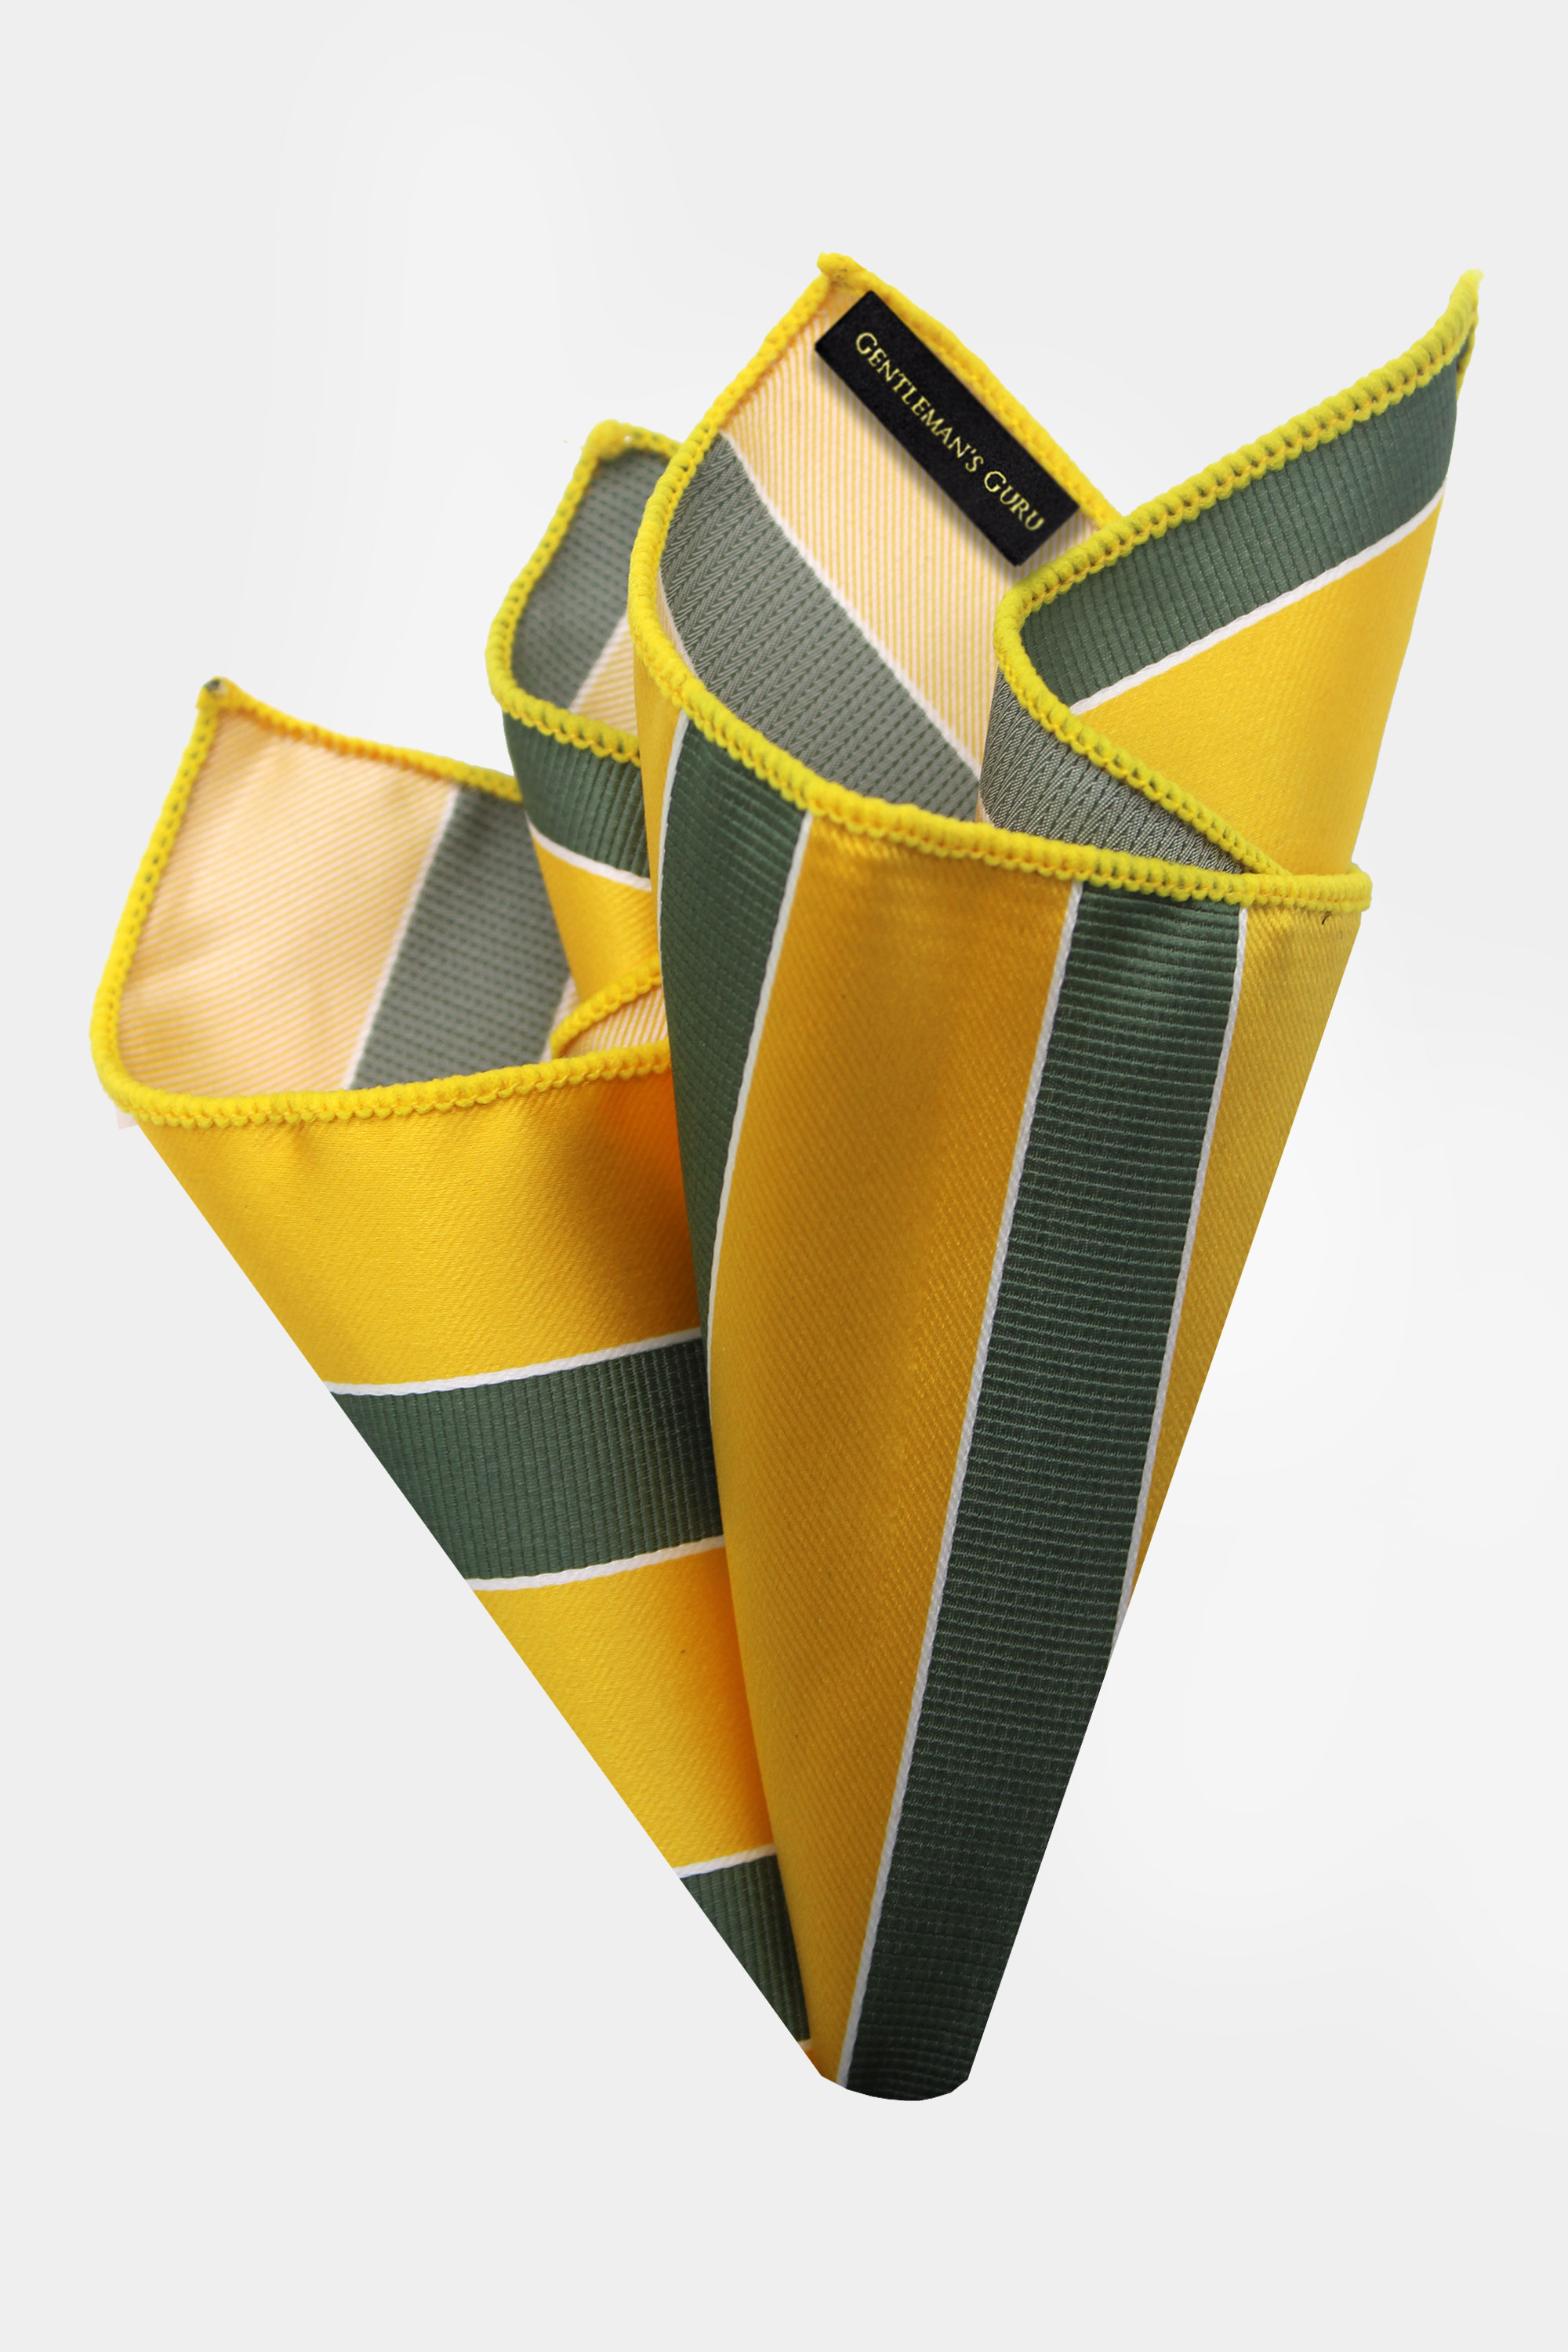 Green-and-Gold-Striped-Pocket-Square-Handkerchief-from-Gentlemansguru.com